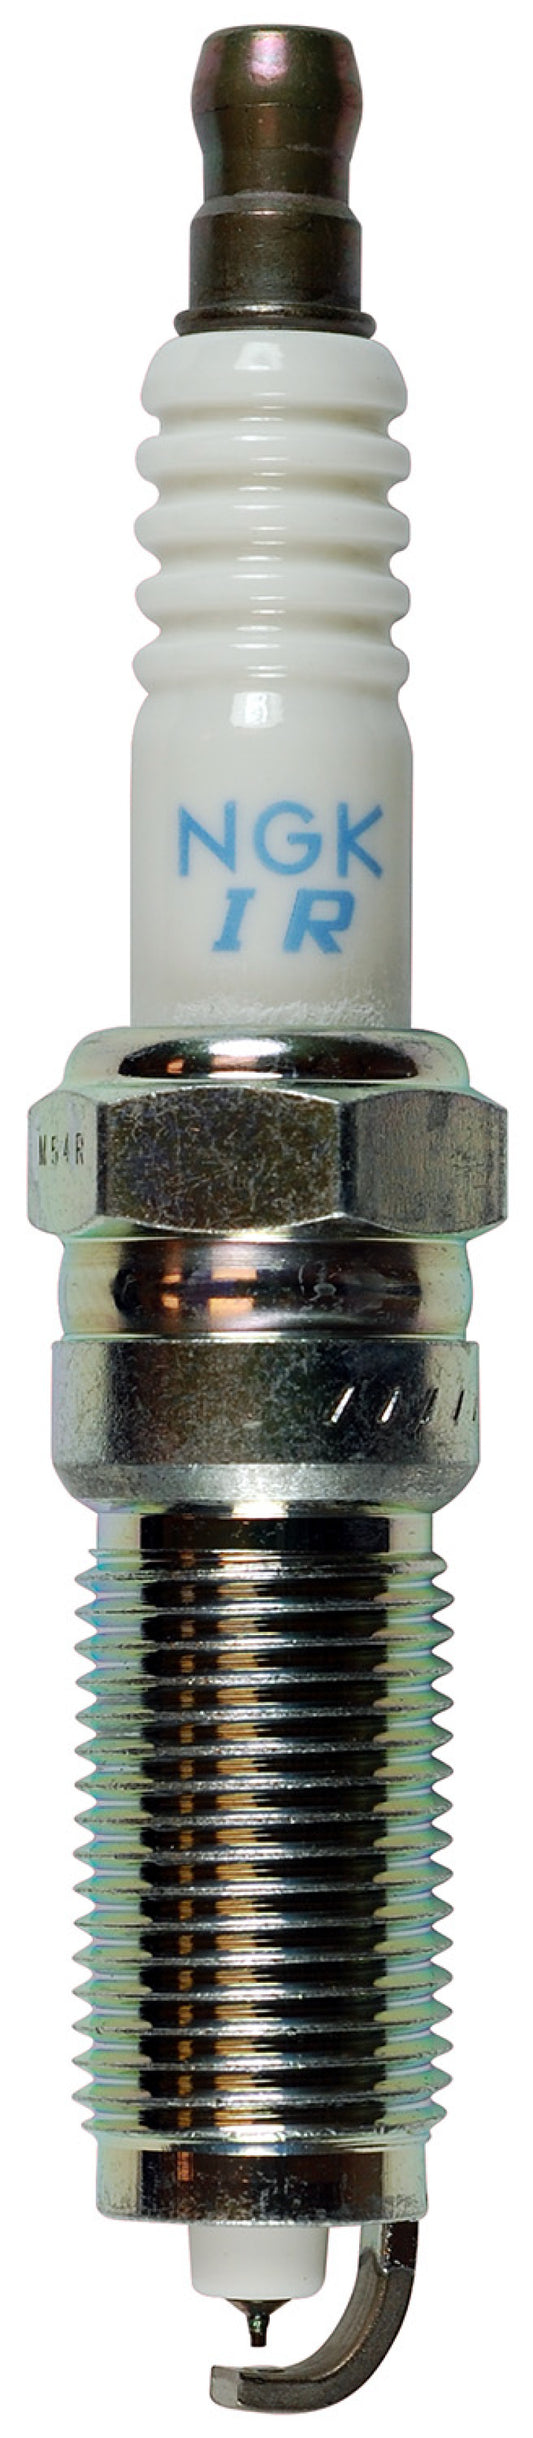 NGK Laser Iridium Spark Plug Box of 4 (ILZTR6A8G)